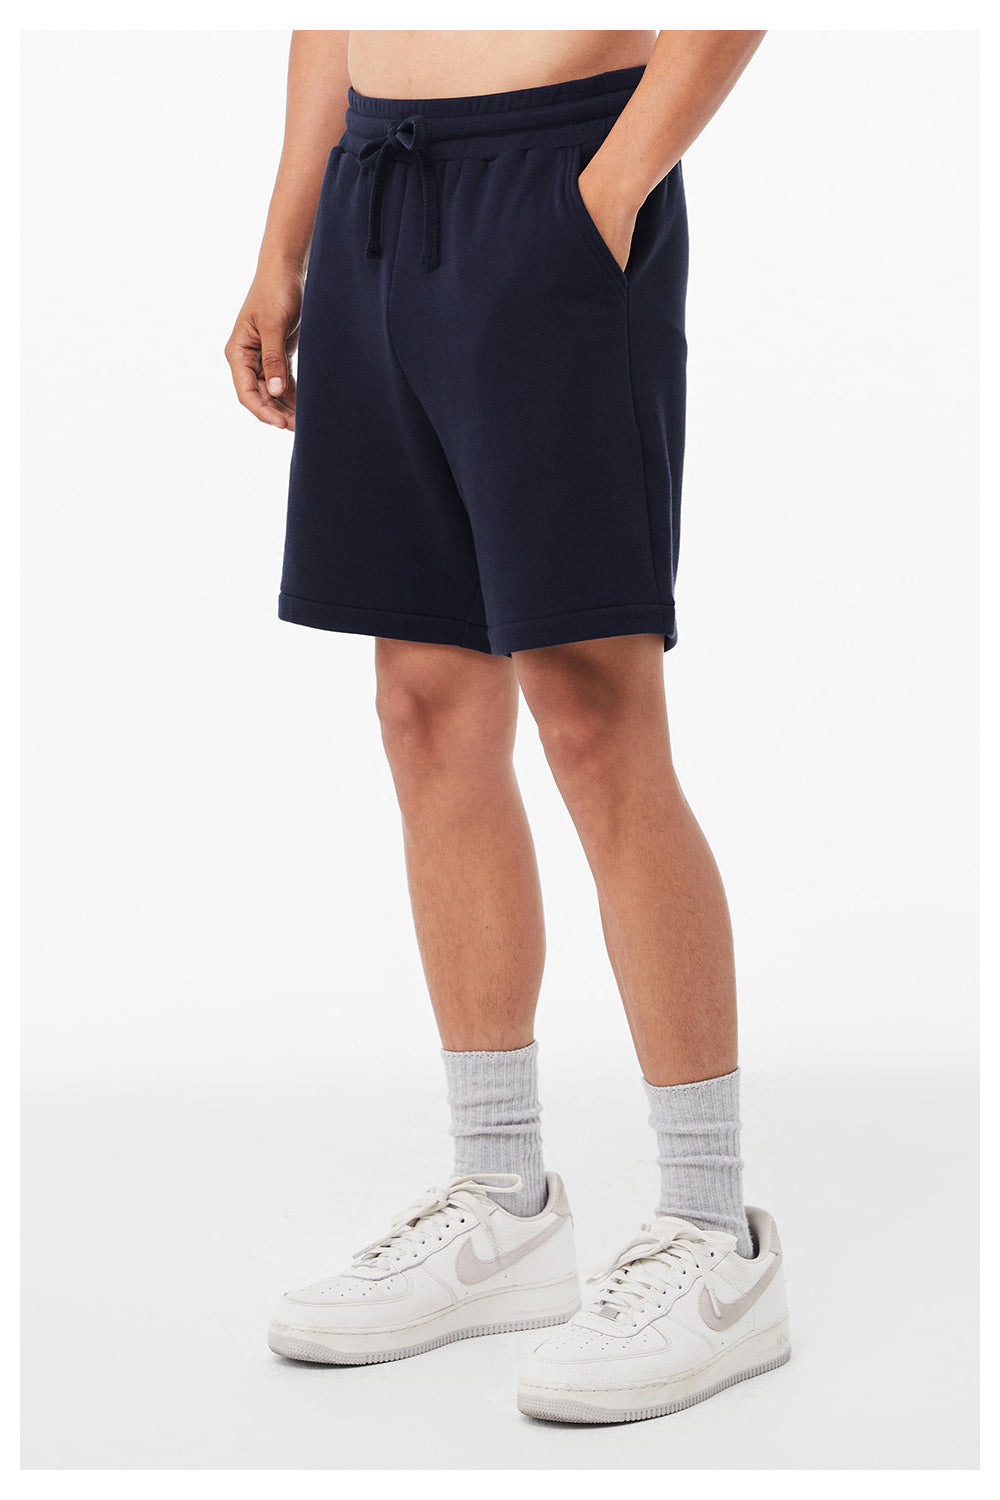 Bella + Canvas 3724 Mens Shorts w/ Pockets Navy Blue Model Side